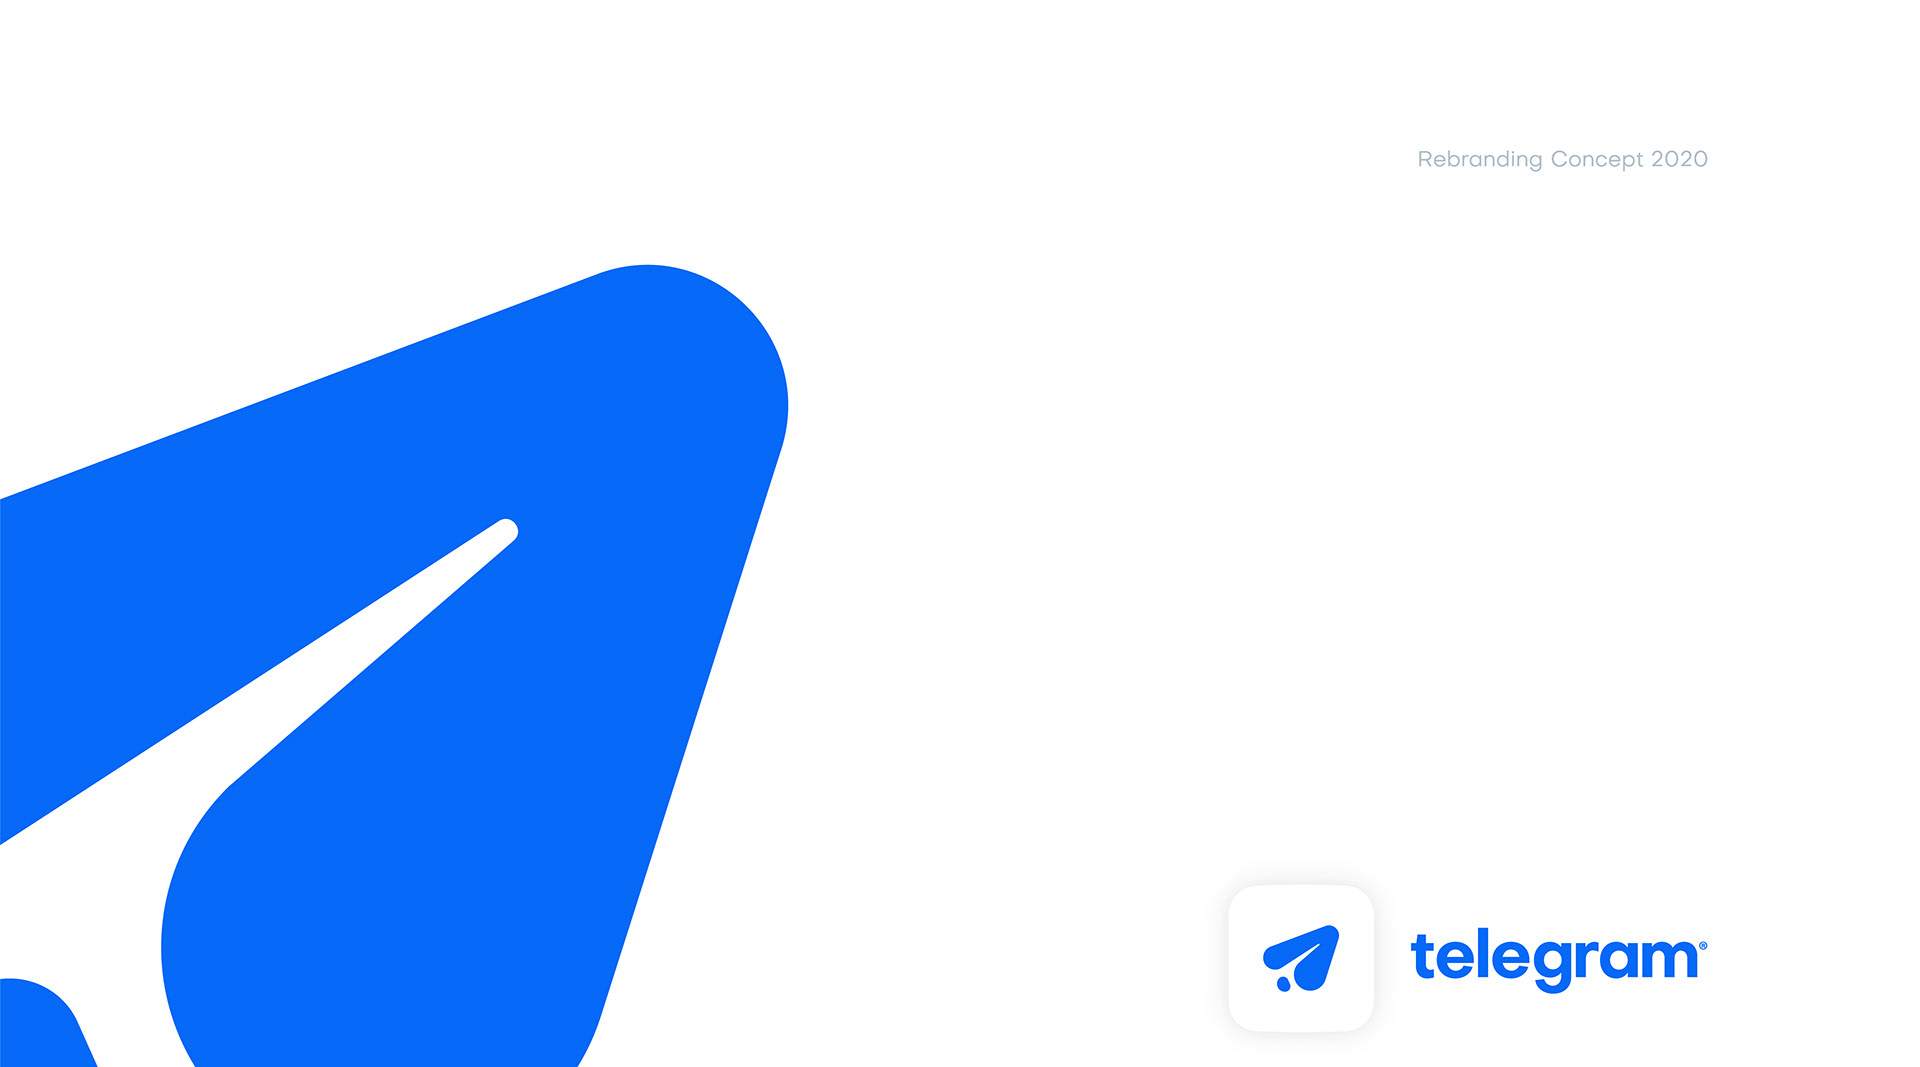 Telegram Branding Concept by George Bishop